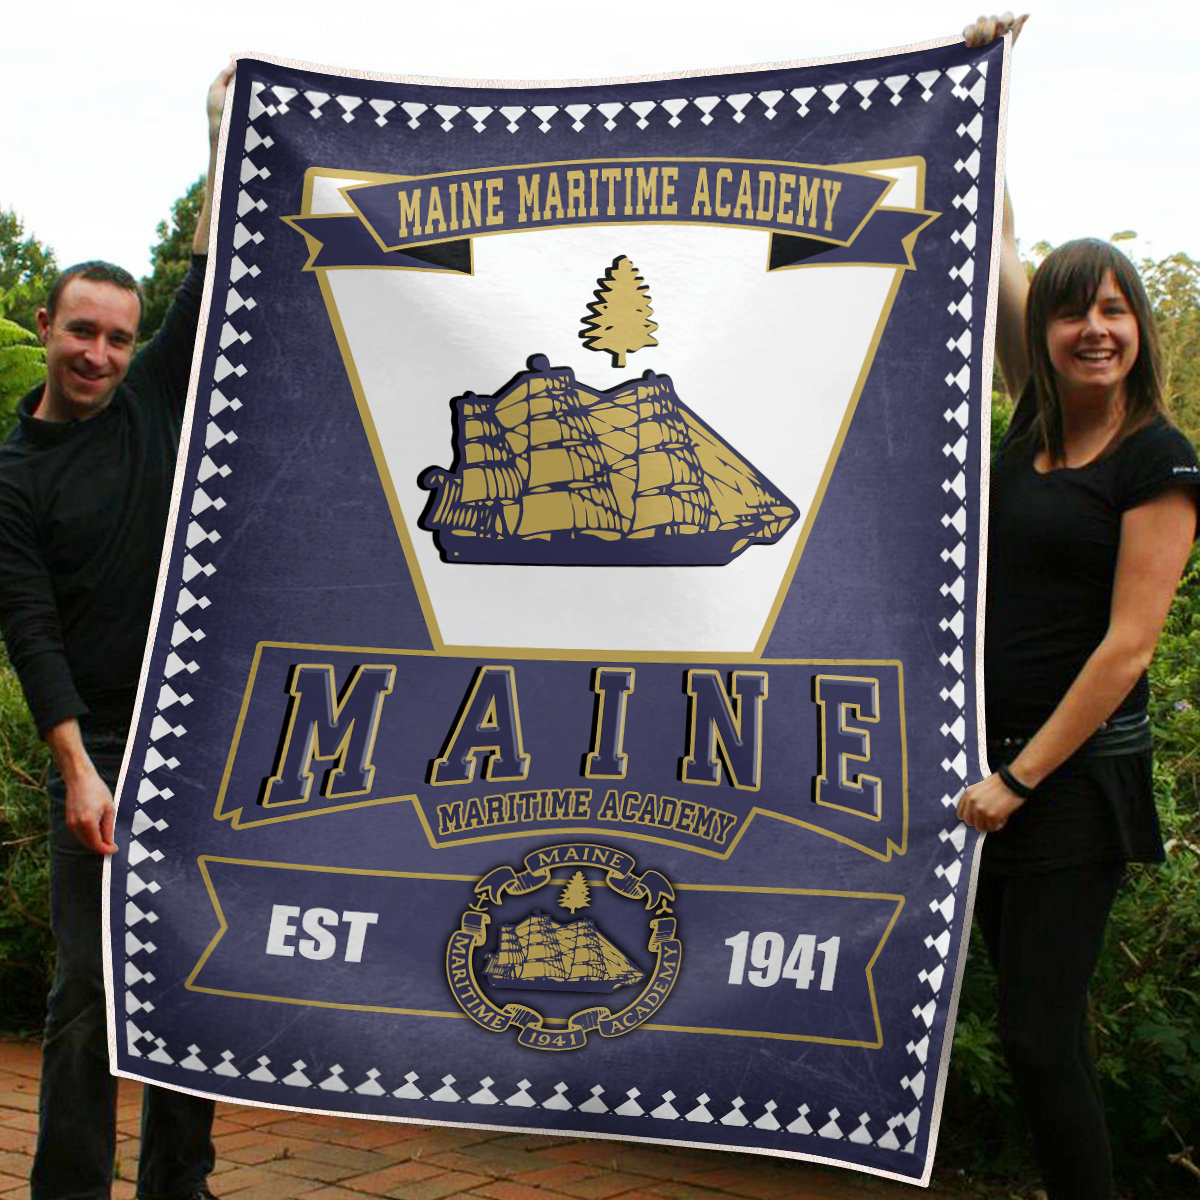 Maine Maritime Academy Quilt Blanket